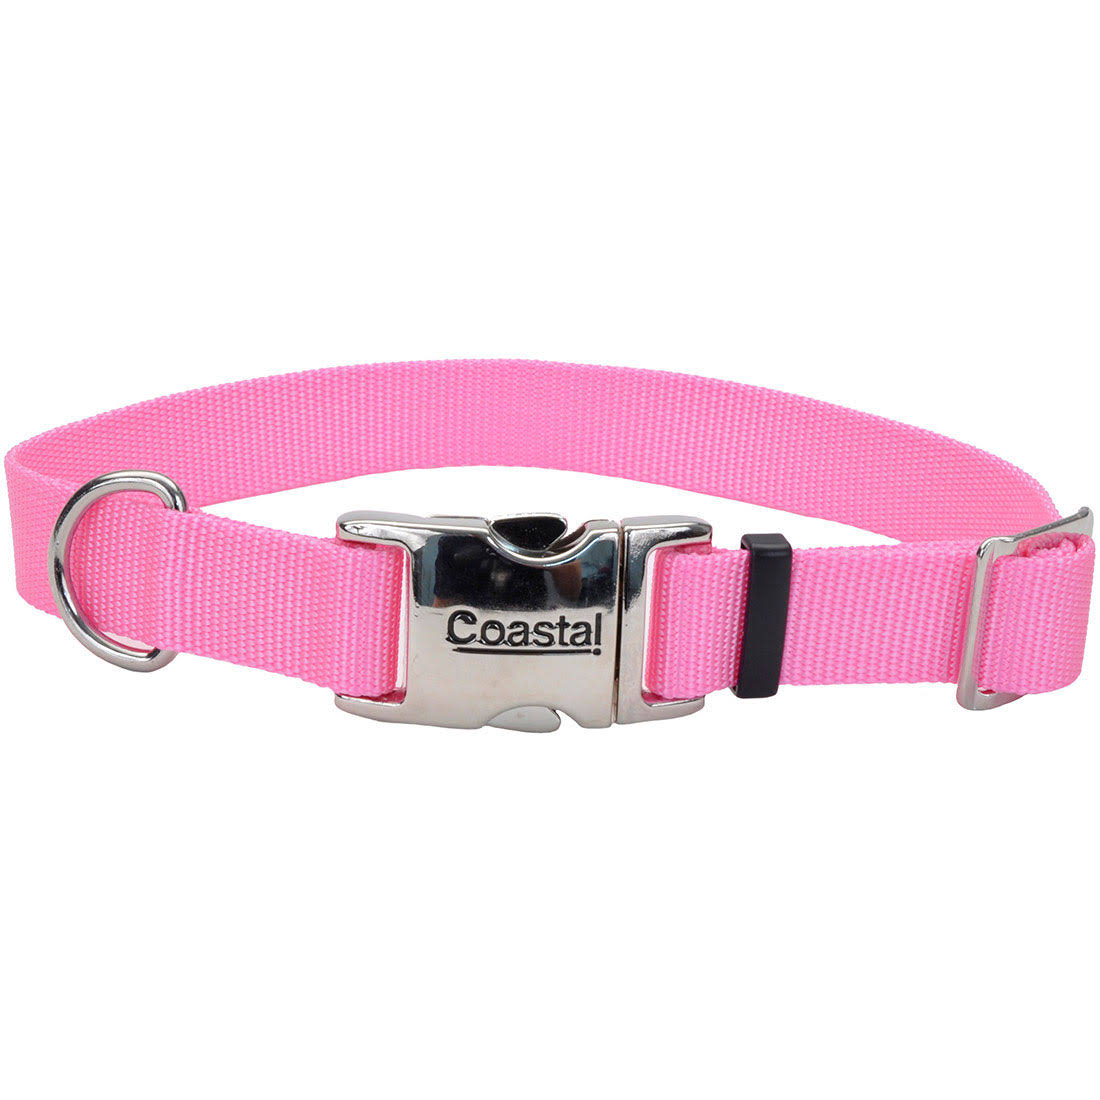 Coastal Adjustable Pet Collar - Pink, 1" X 26"